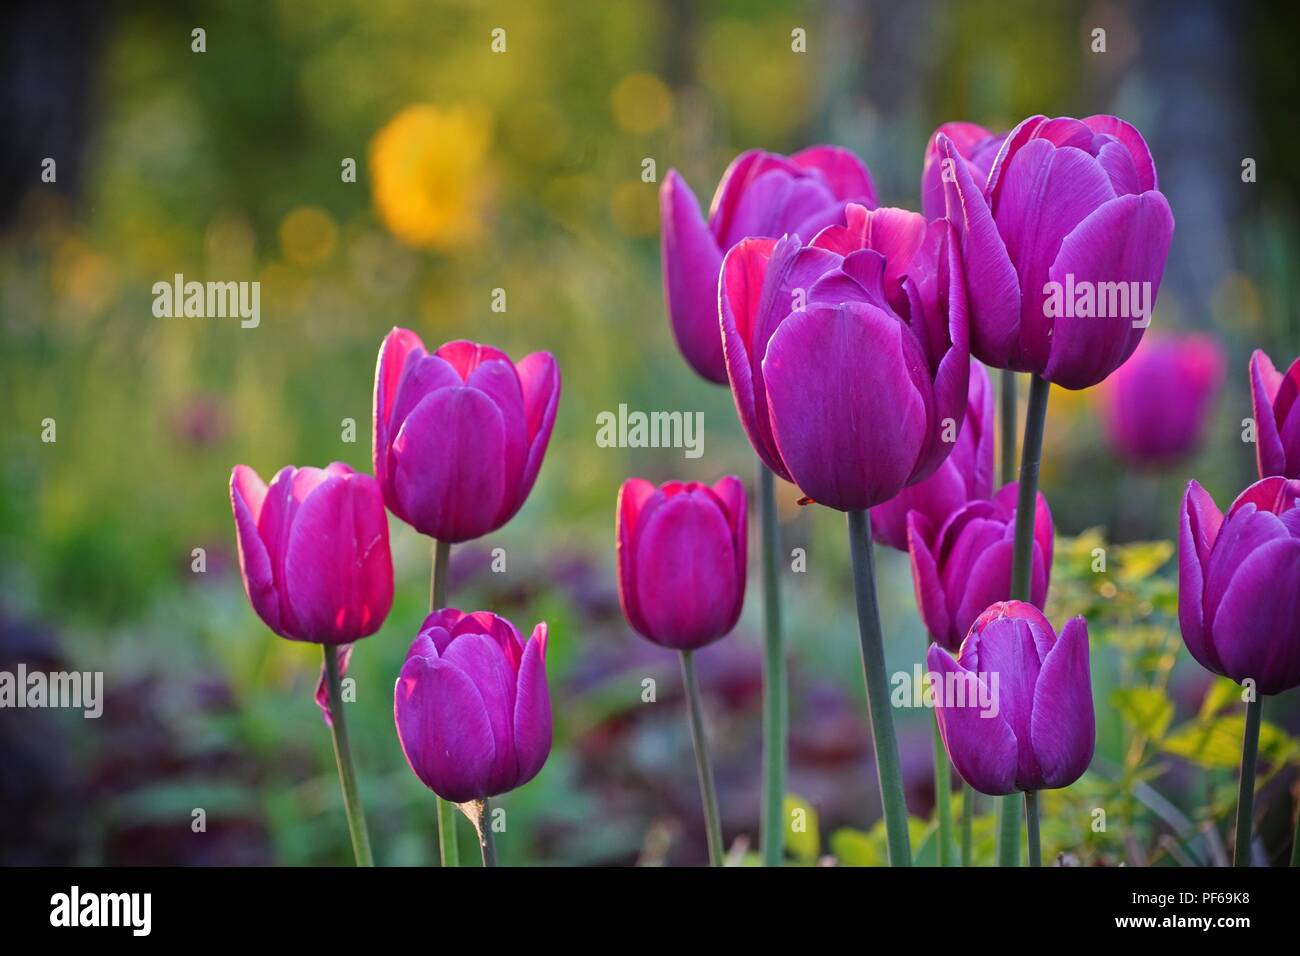 Grupo de tulipanes púrpura en un parque, fondo borroso Foto de stock